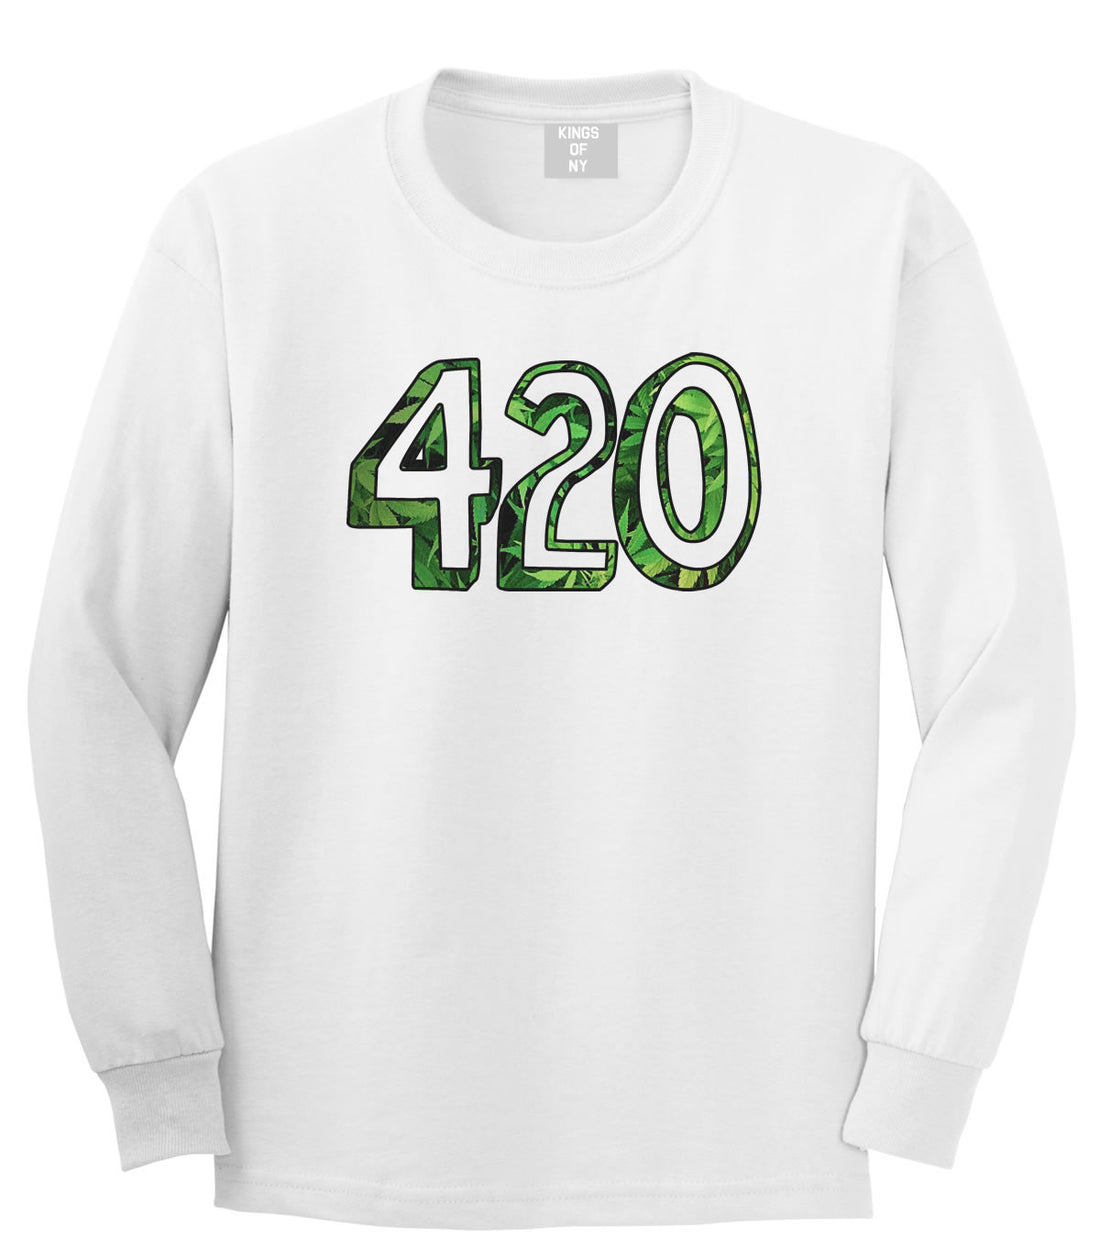  420 Weed Marijuana Print Long Sleeve T-Shirt in White by Kings Of NY